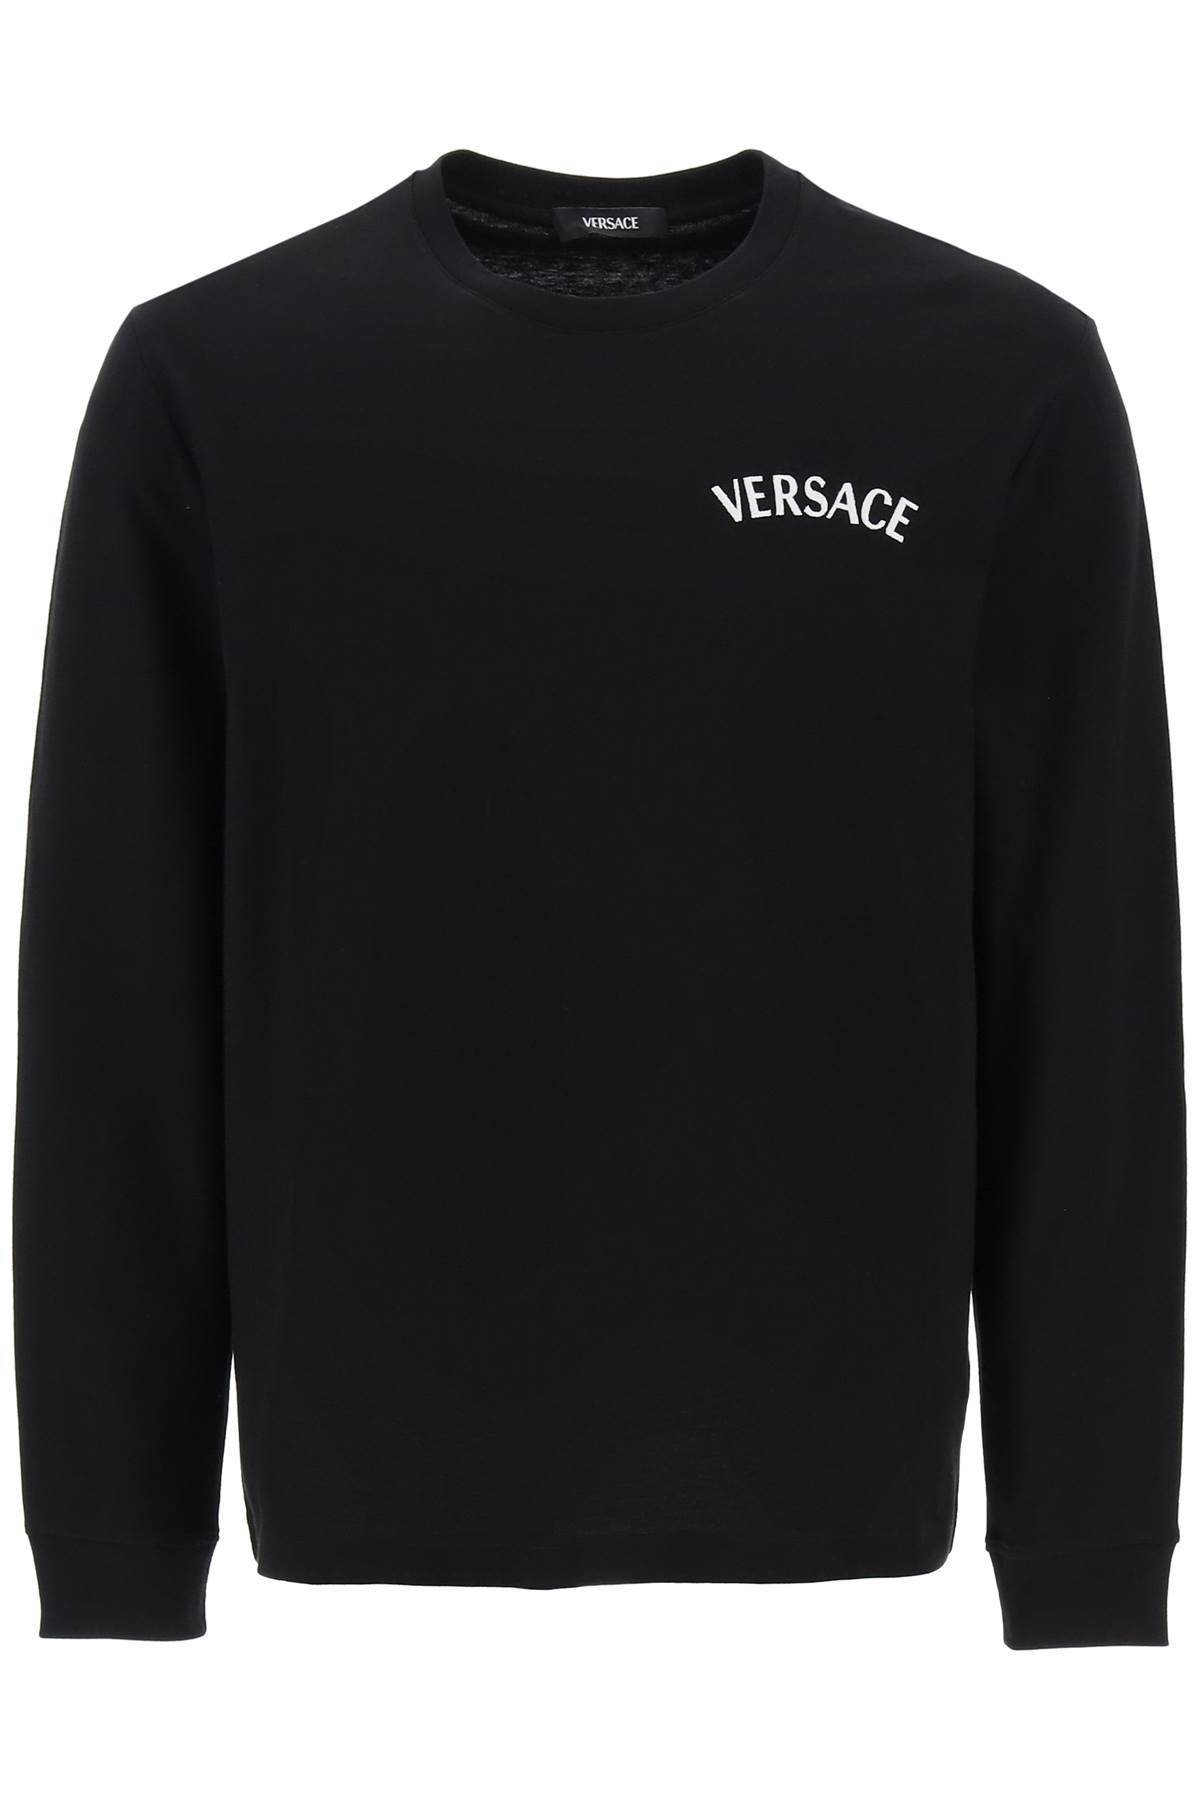 Versace VERSACE milano stamp long-sleeved t-shirt